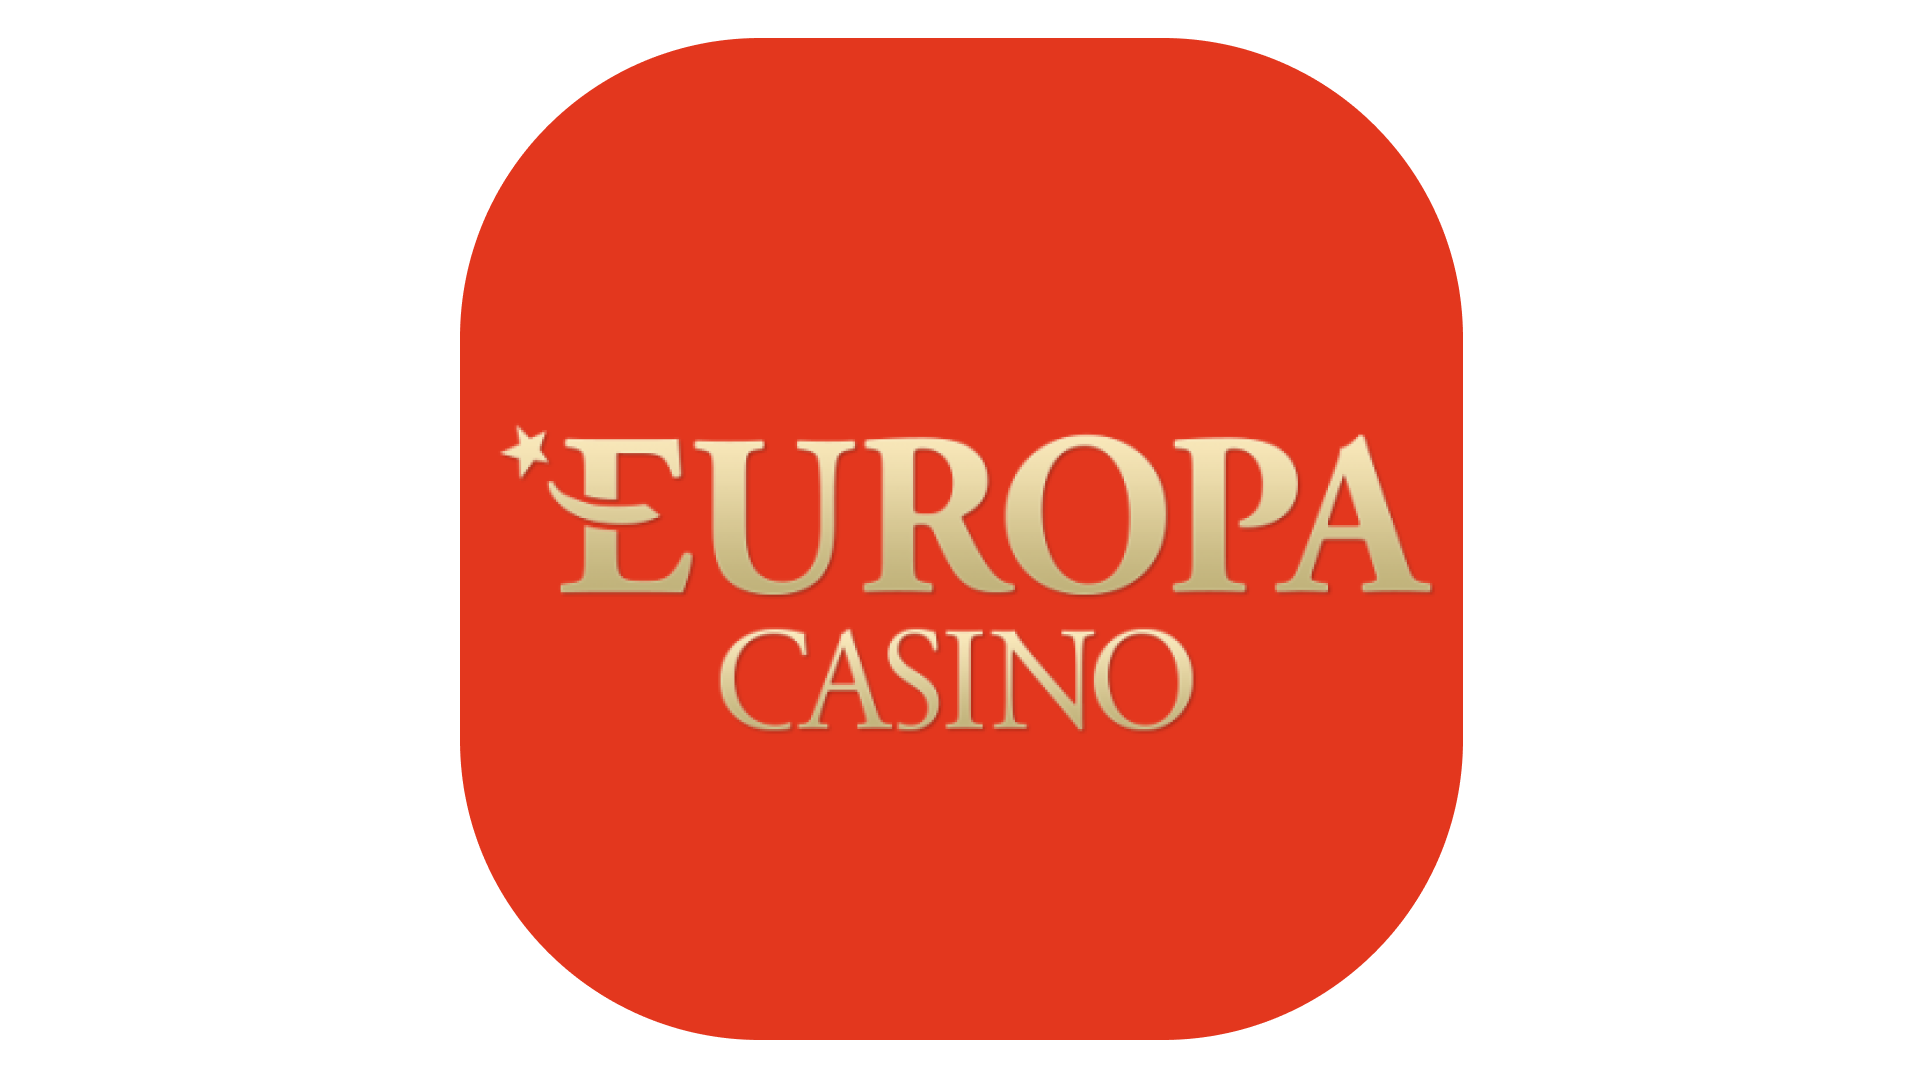 Europa casino